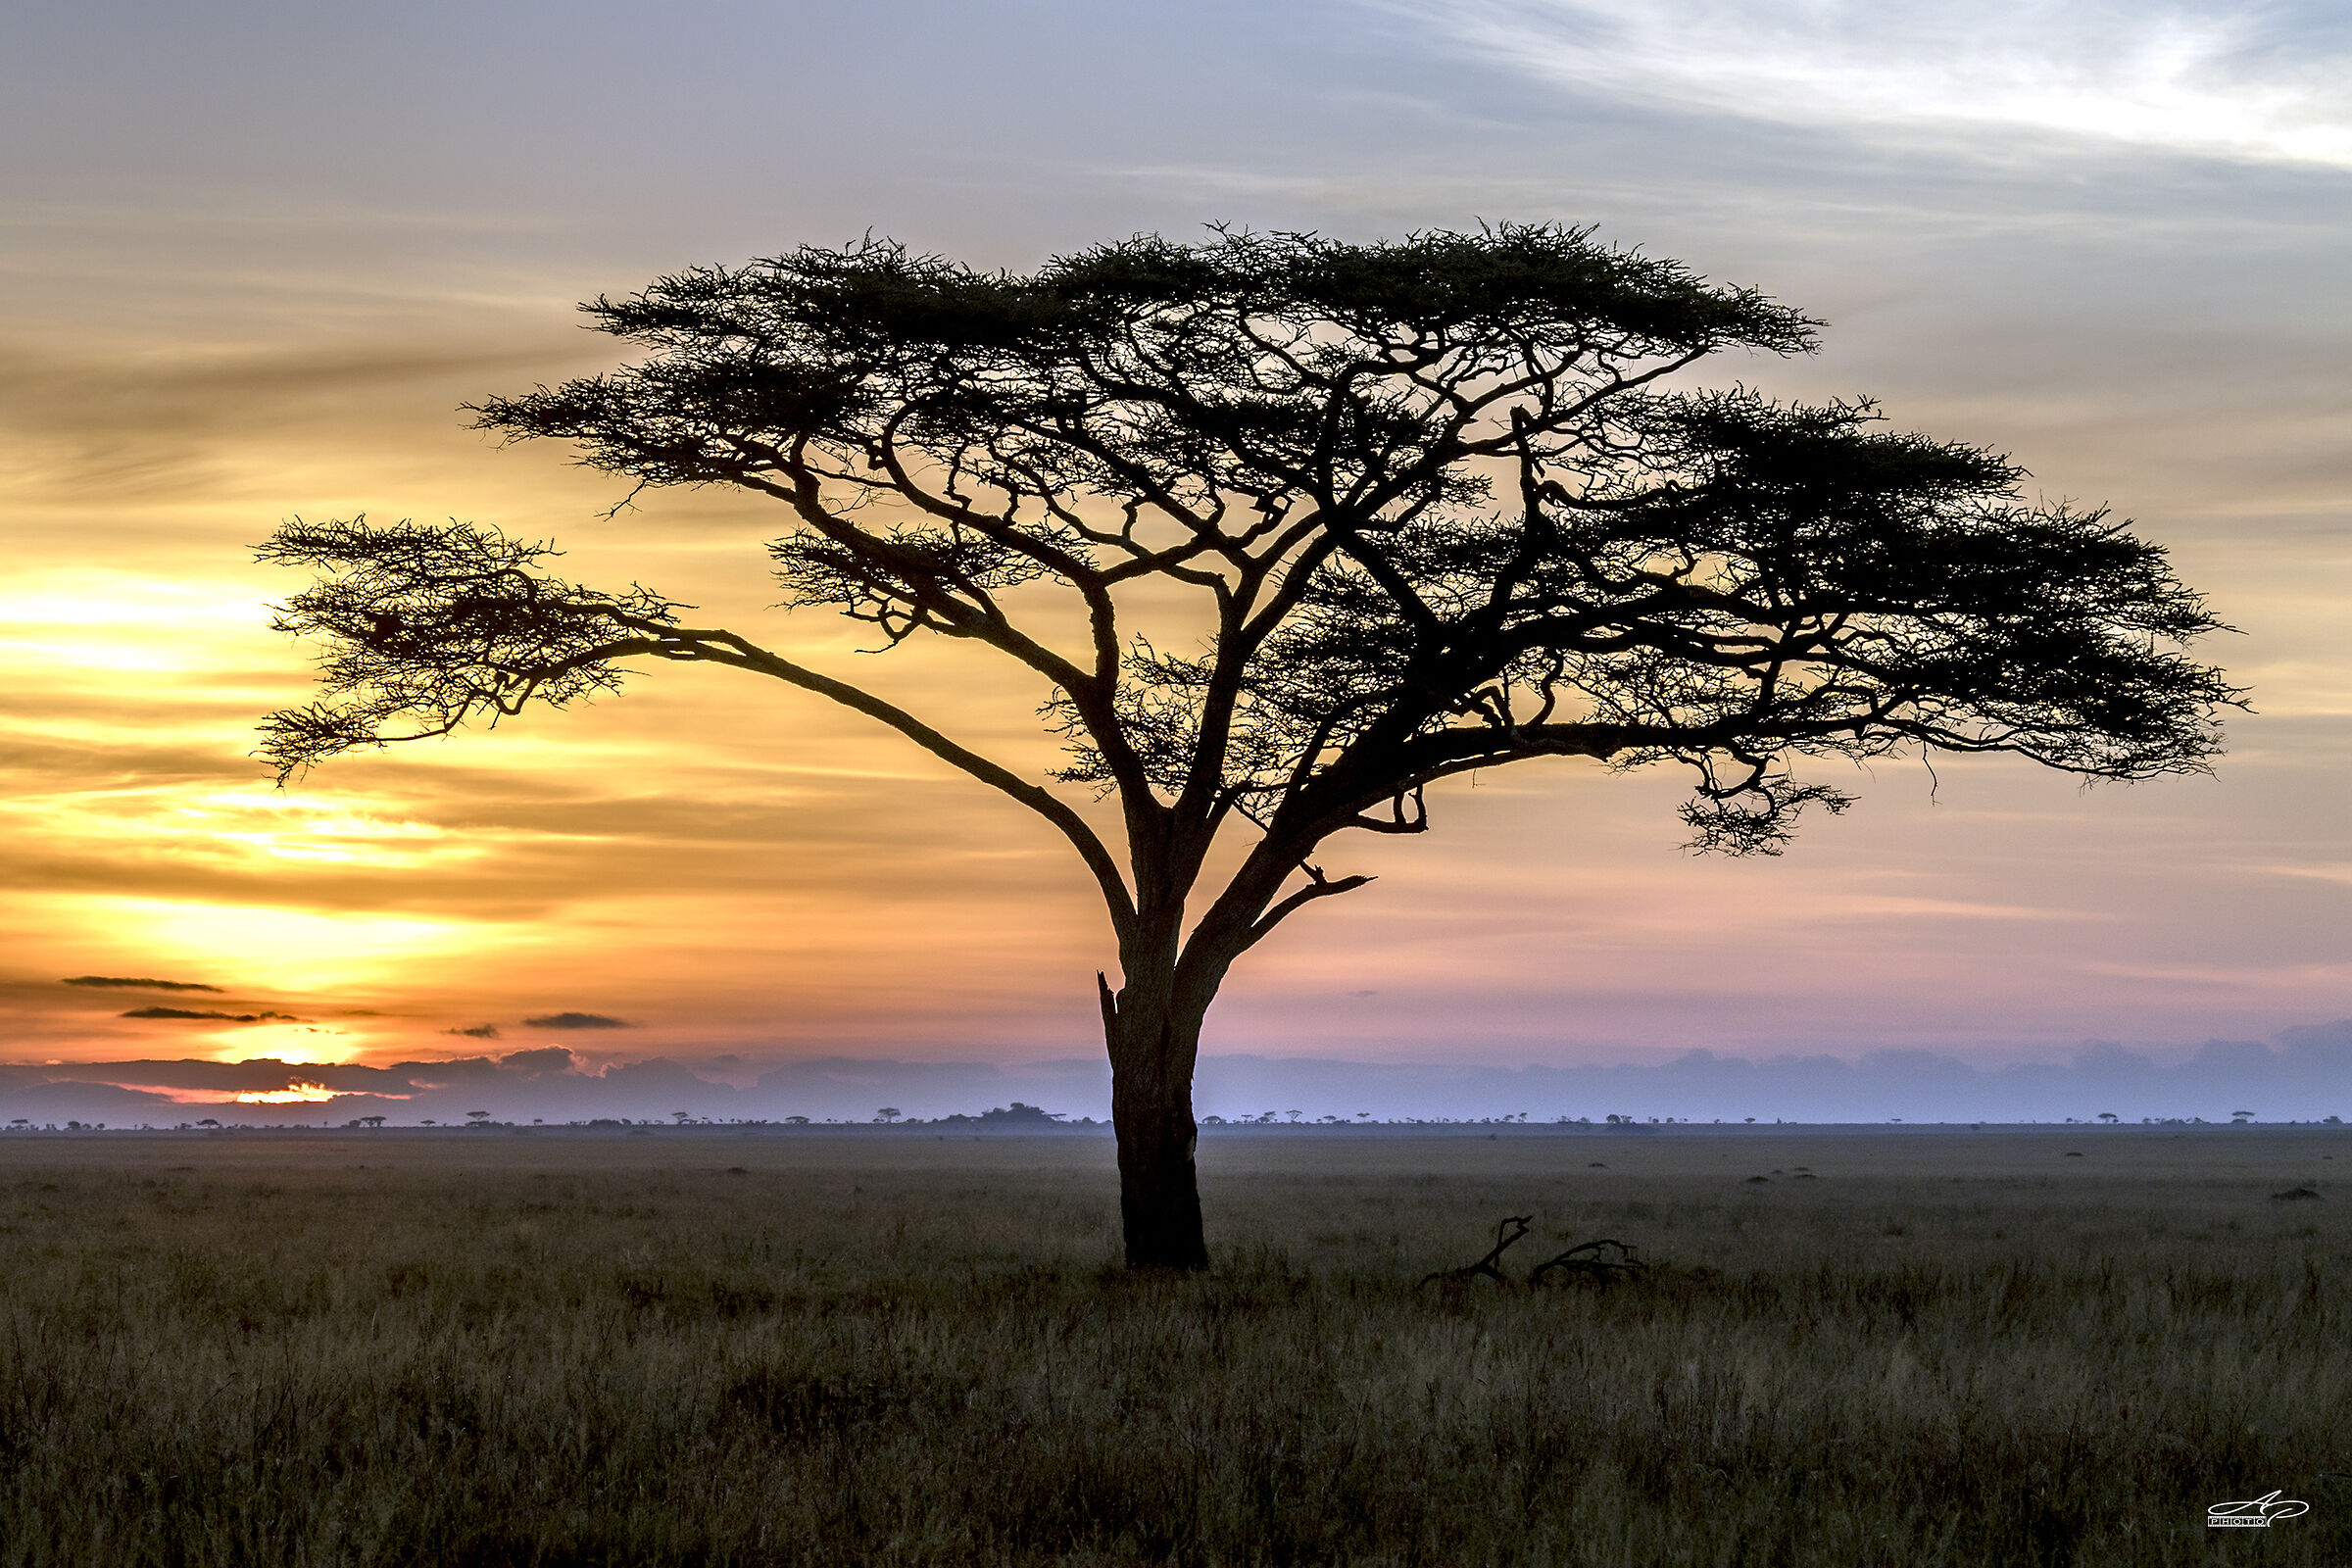 Serengeti-The New Day of Acacia.. ...